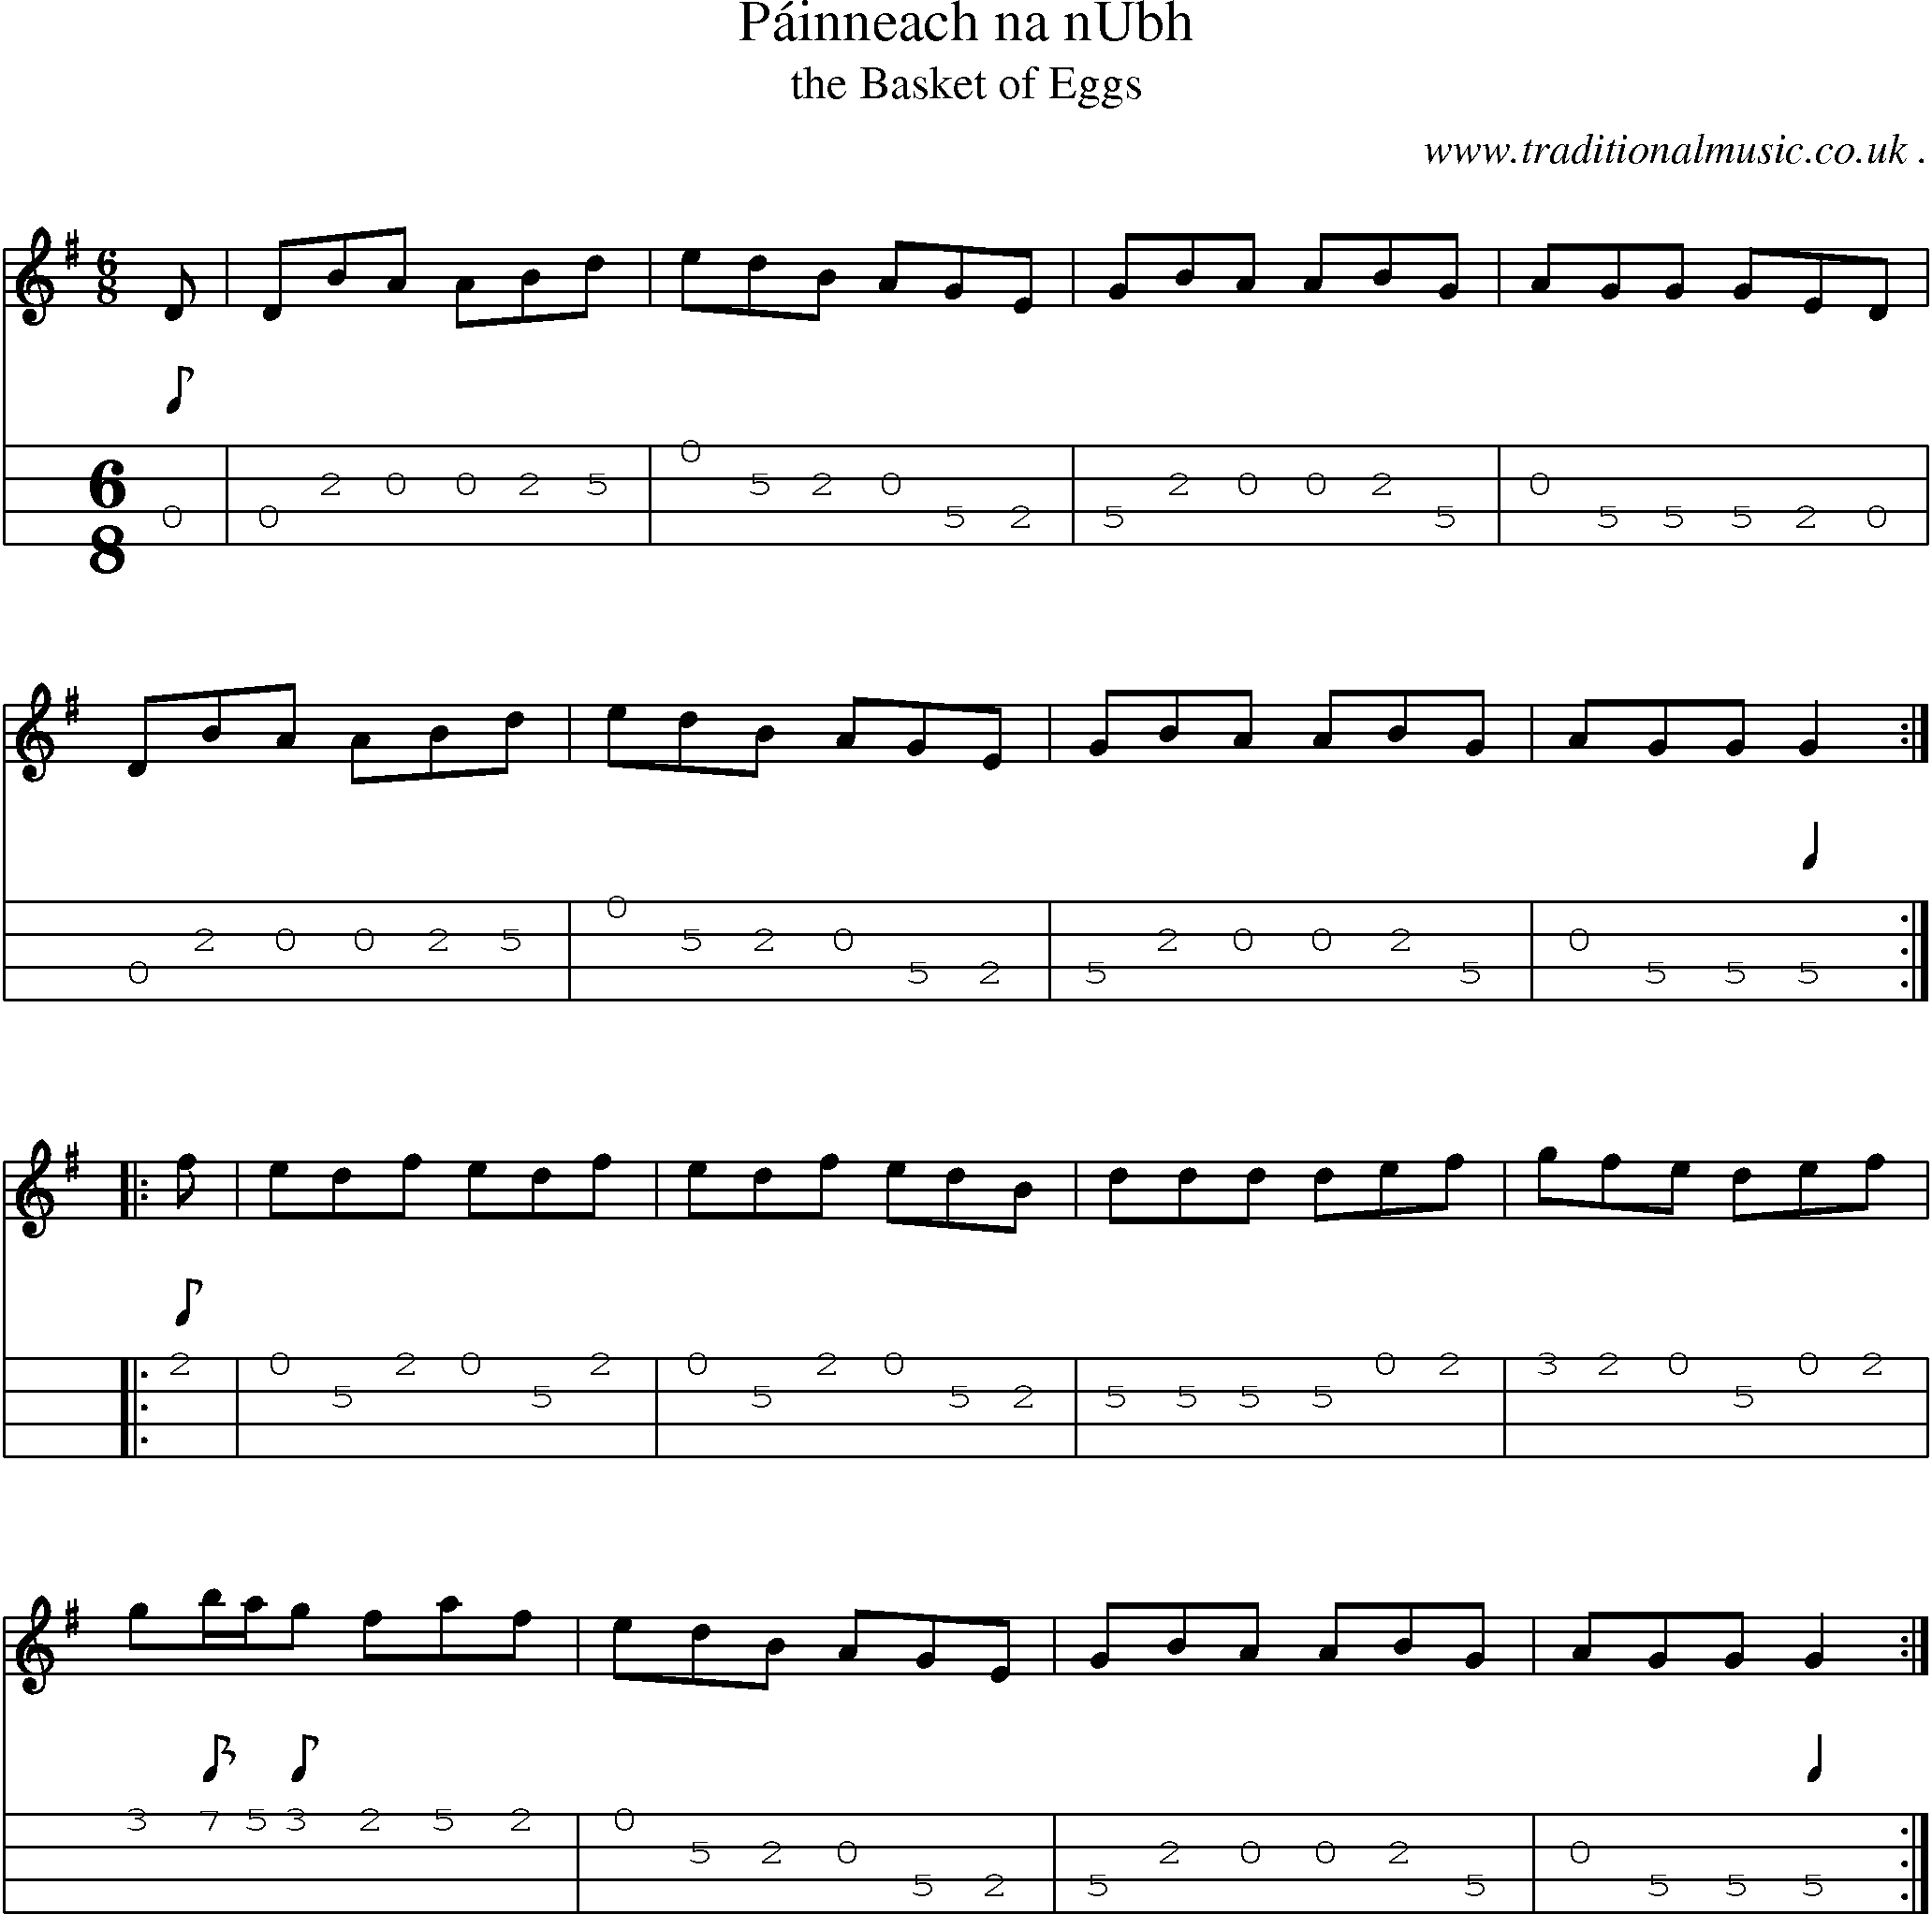 Sheet-music  score, Chords and Mandolin Tabs for Painneach Na Nubh